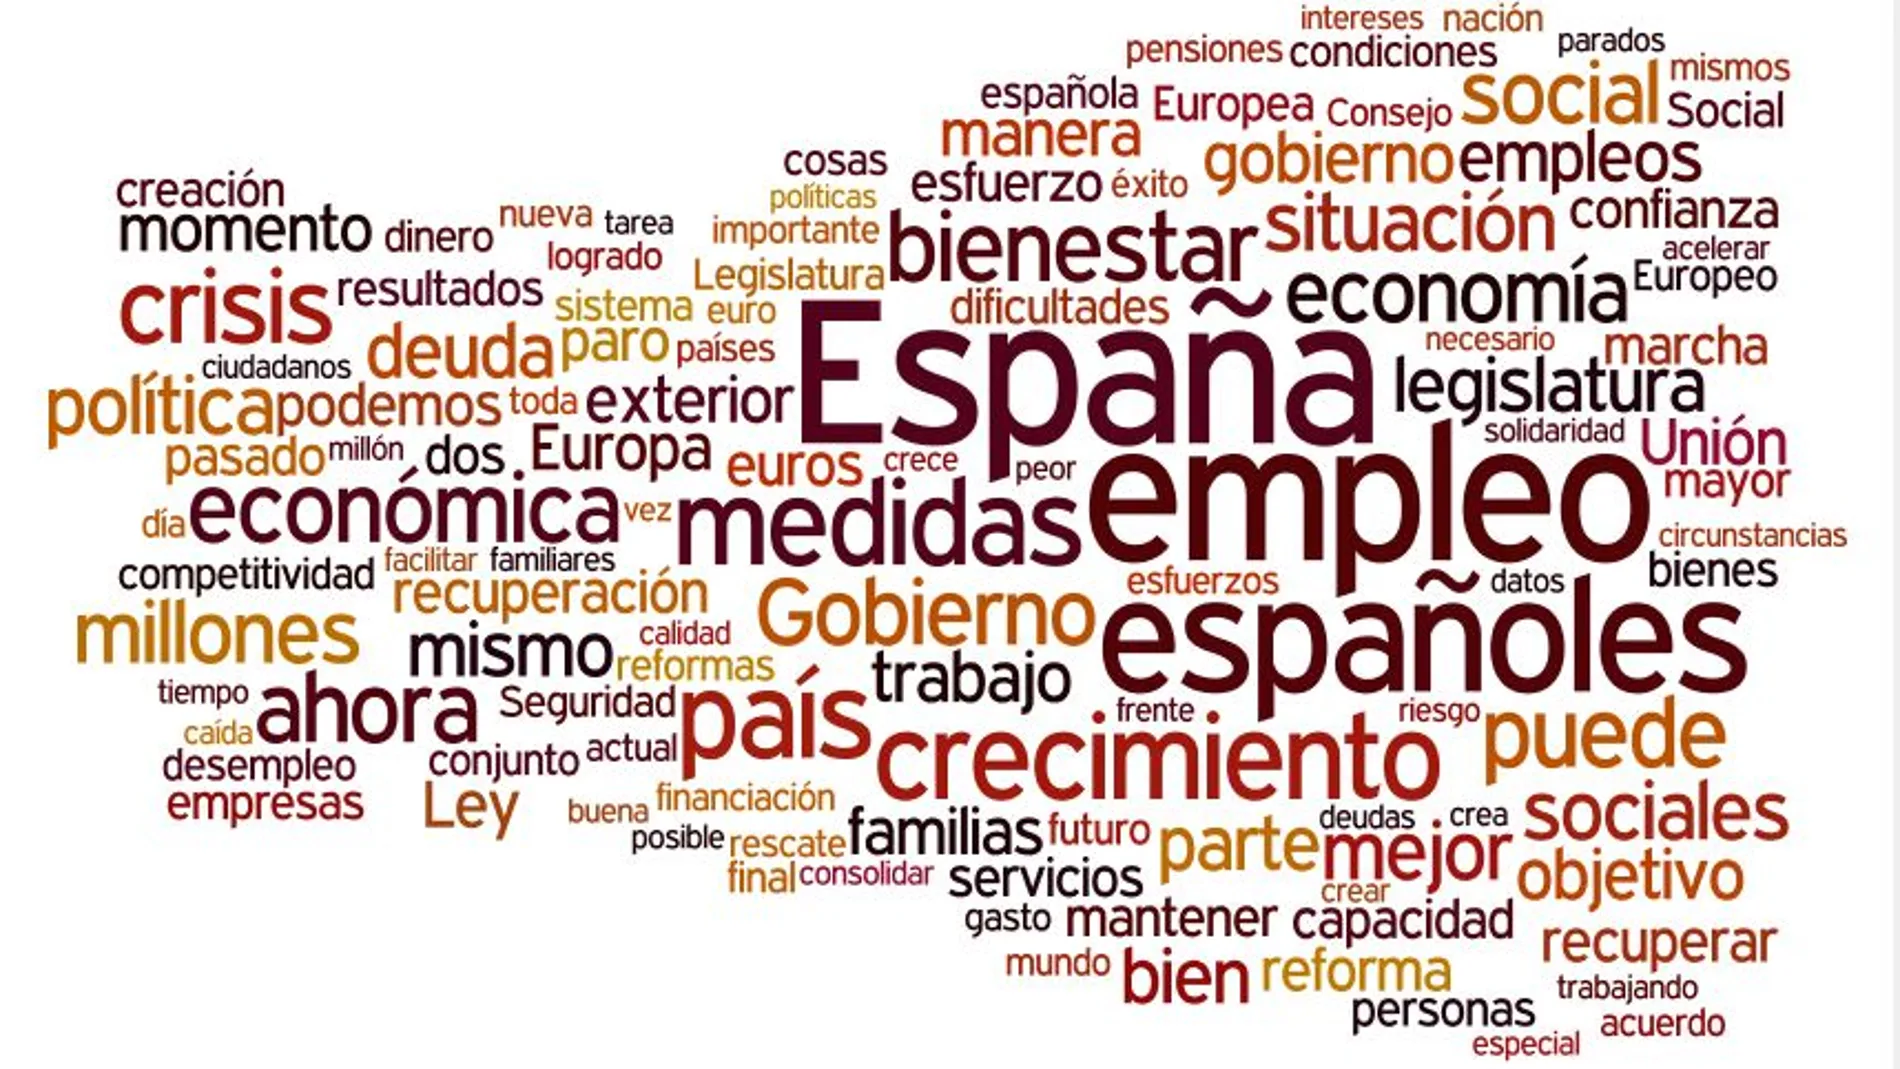 España, crecimiento o empleo, palabras más usadas